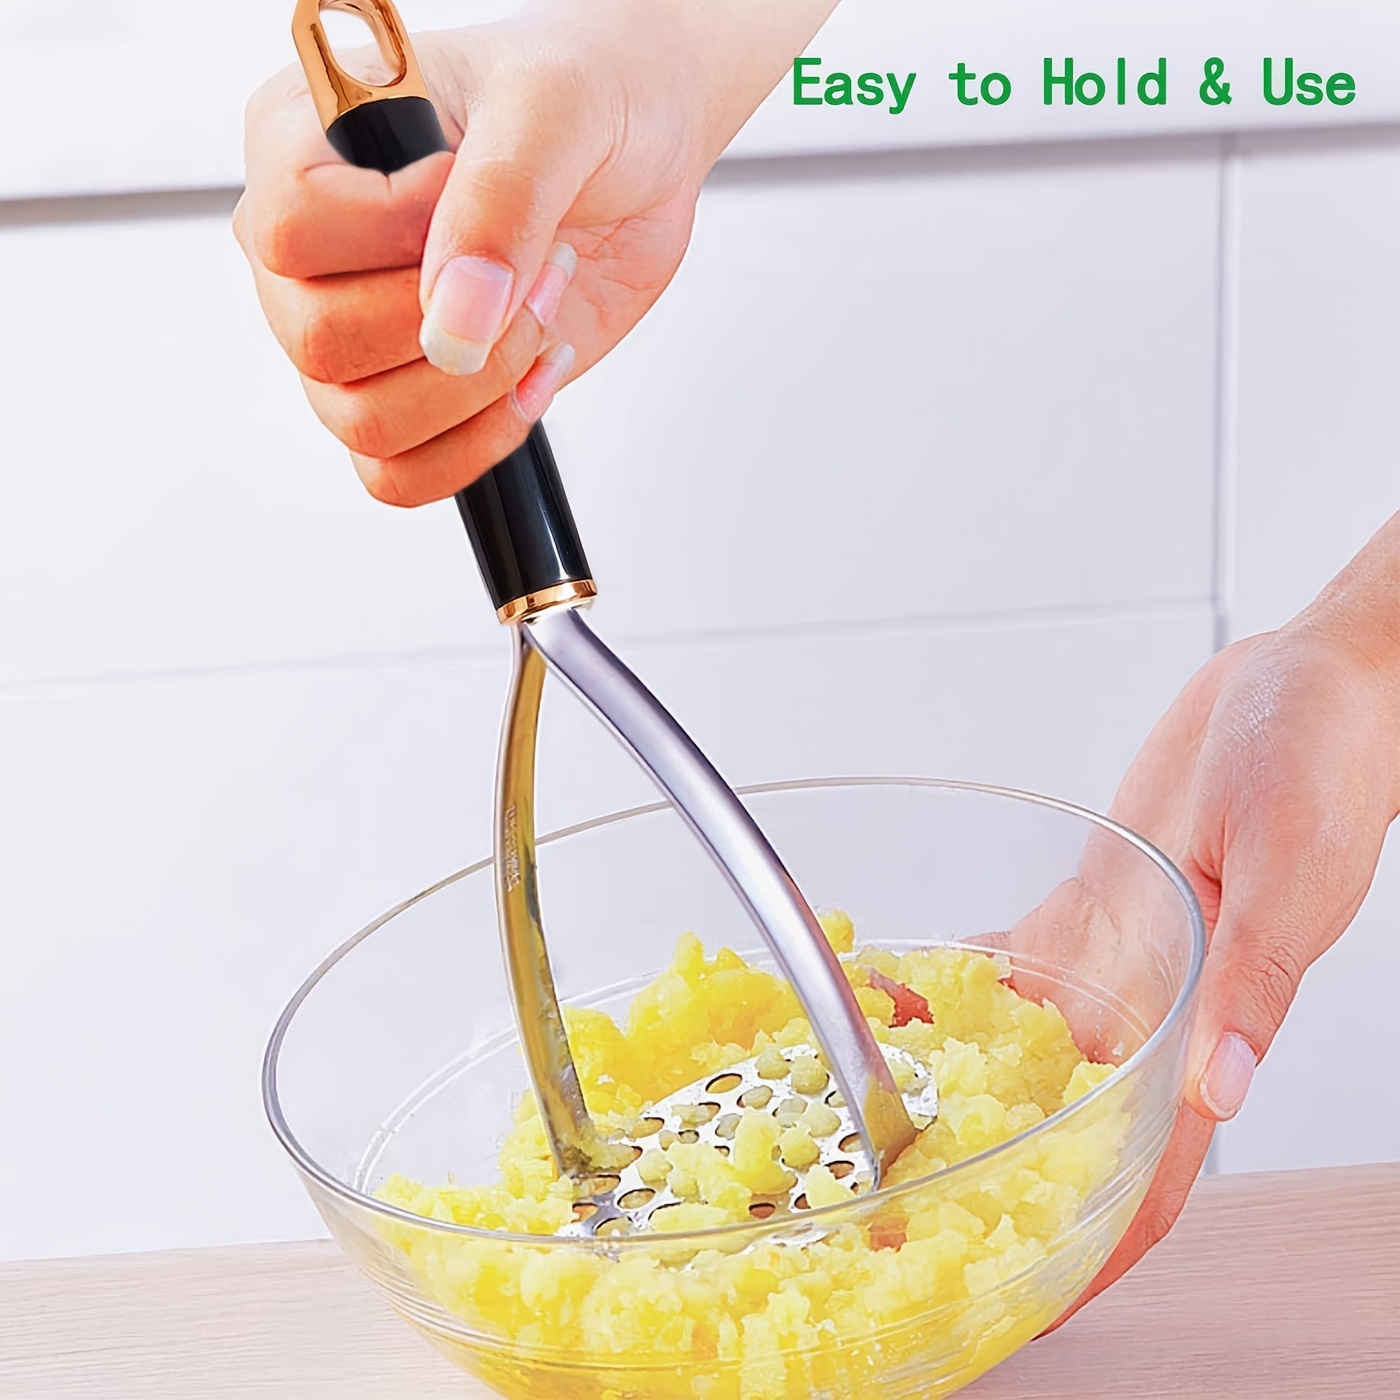  Handheld Potato Fruit Smasher for Kitchen - Food Masher Hand  Tool - Manual Utensil for Mashed Potatoes: Home & Kitchen